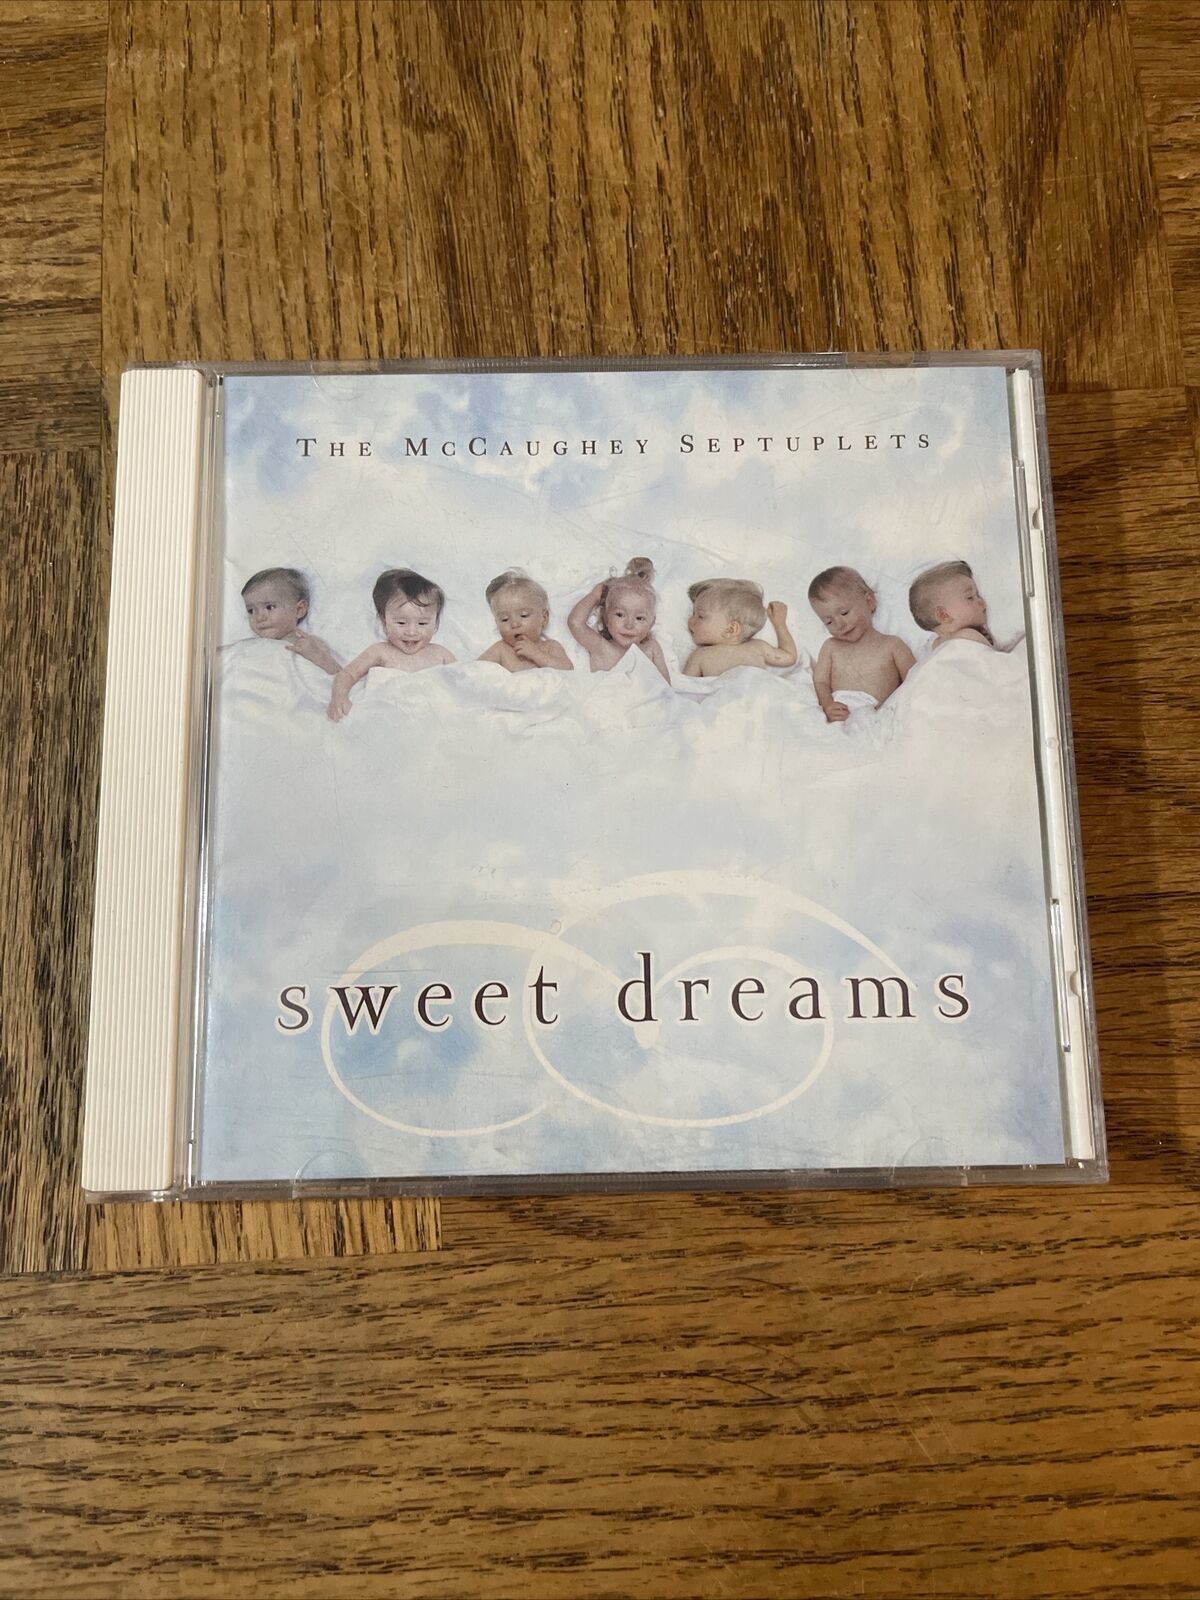 The Mccaughey Septuplets Sweet Dreams CD - CDs